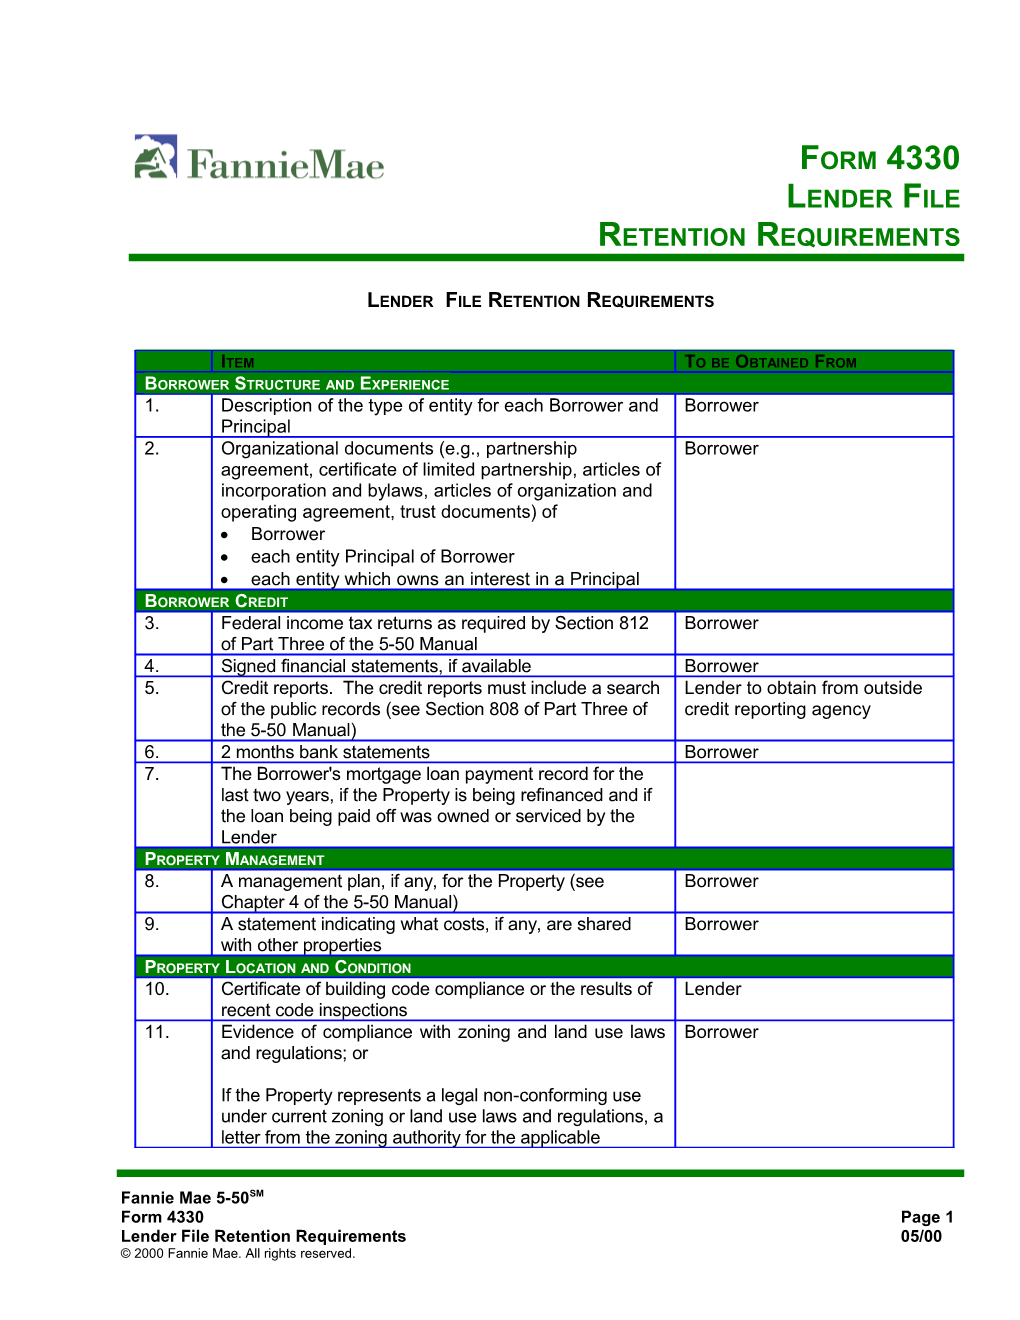 Lender File Retention Requirements